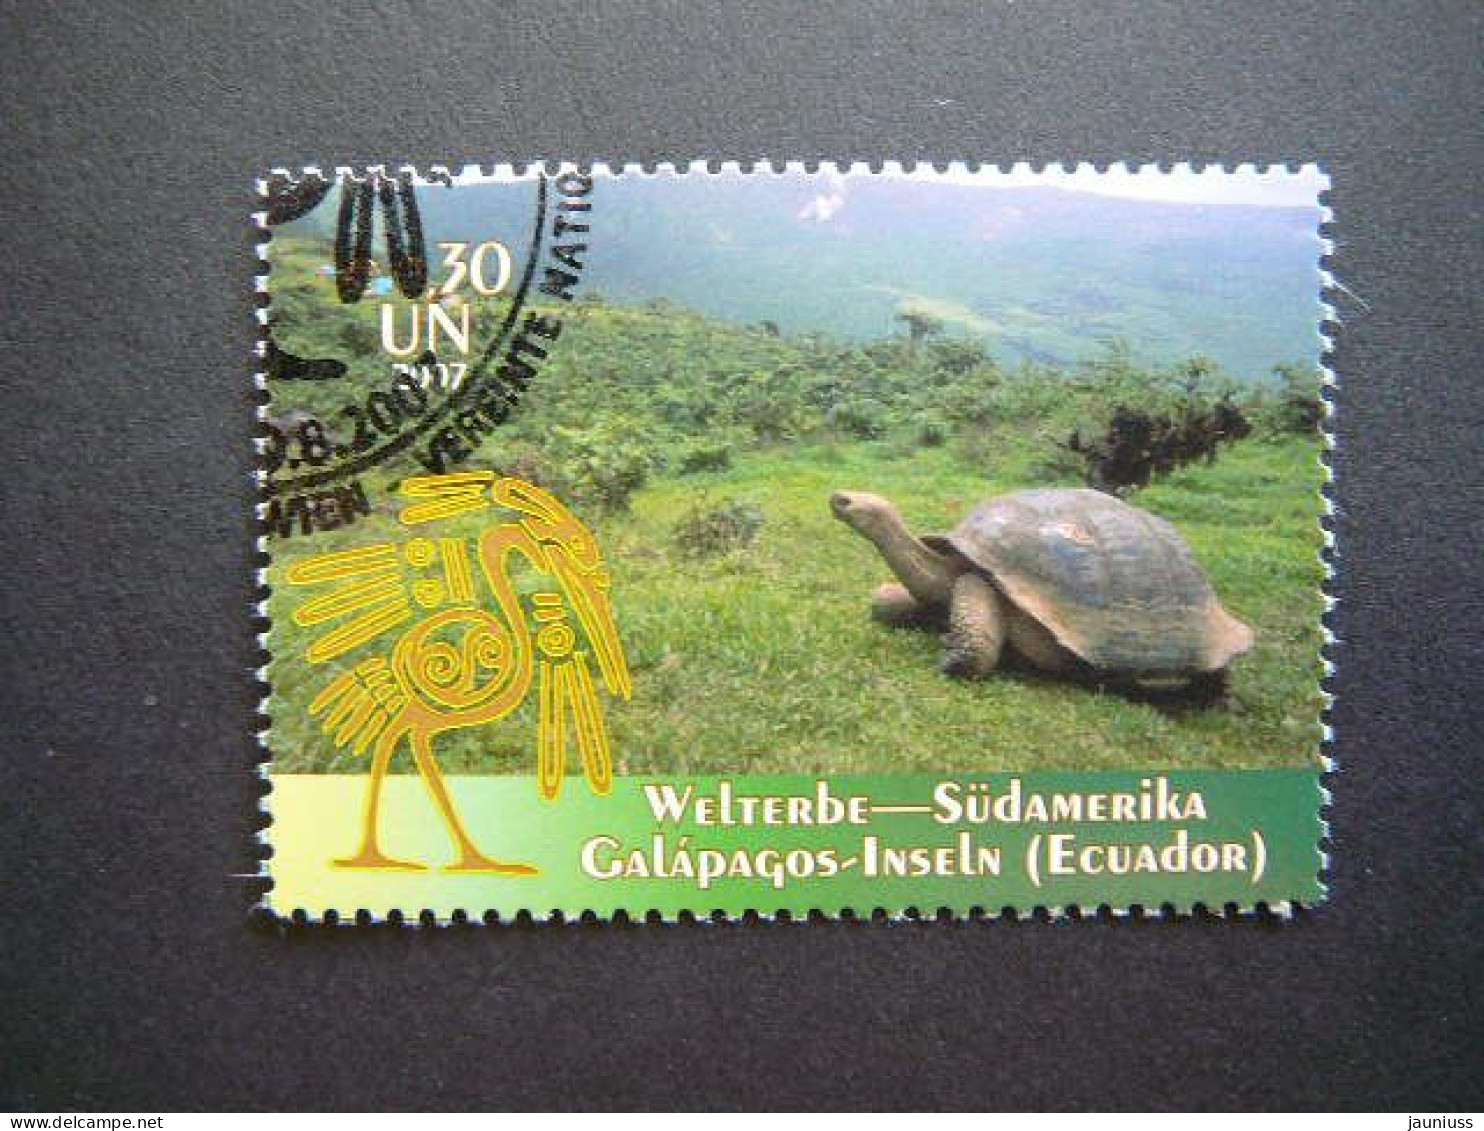 World Heritage Sites # United Nations UN Vienna 2007 Used #Mi.511 Galapagos Turtles - Used Stamps